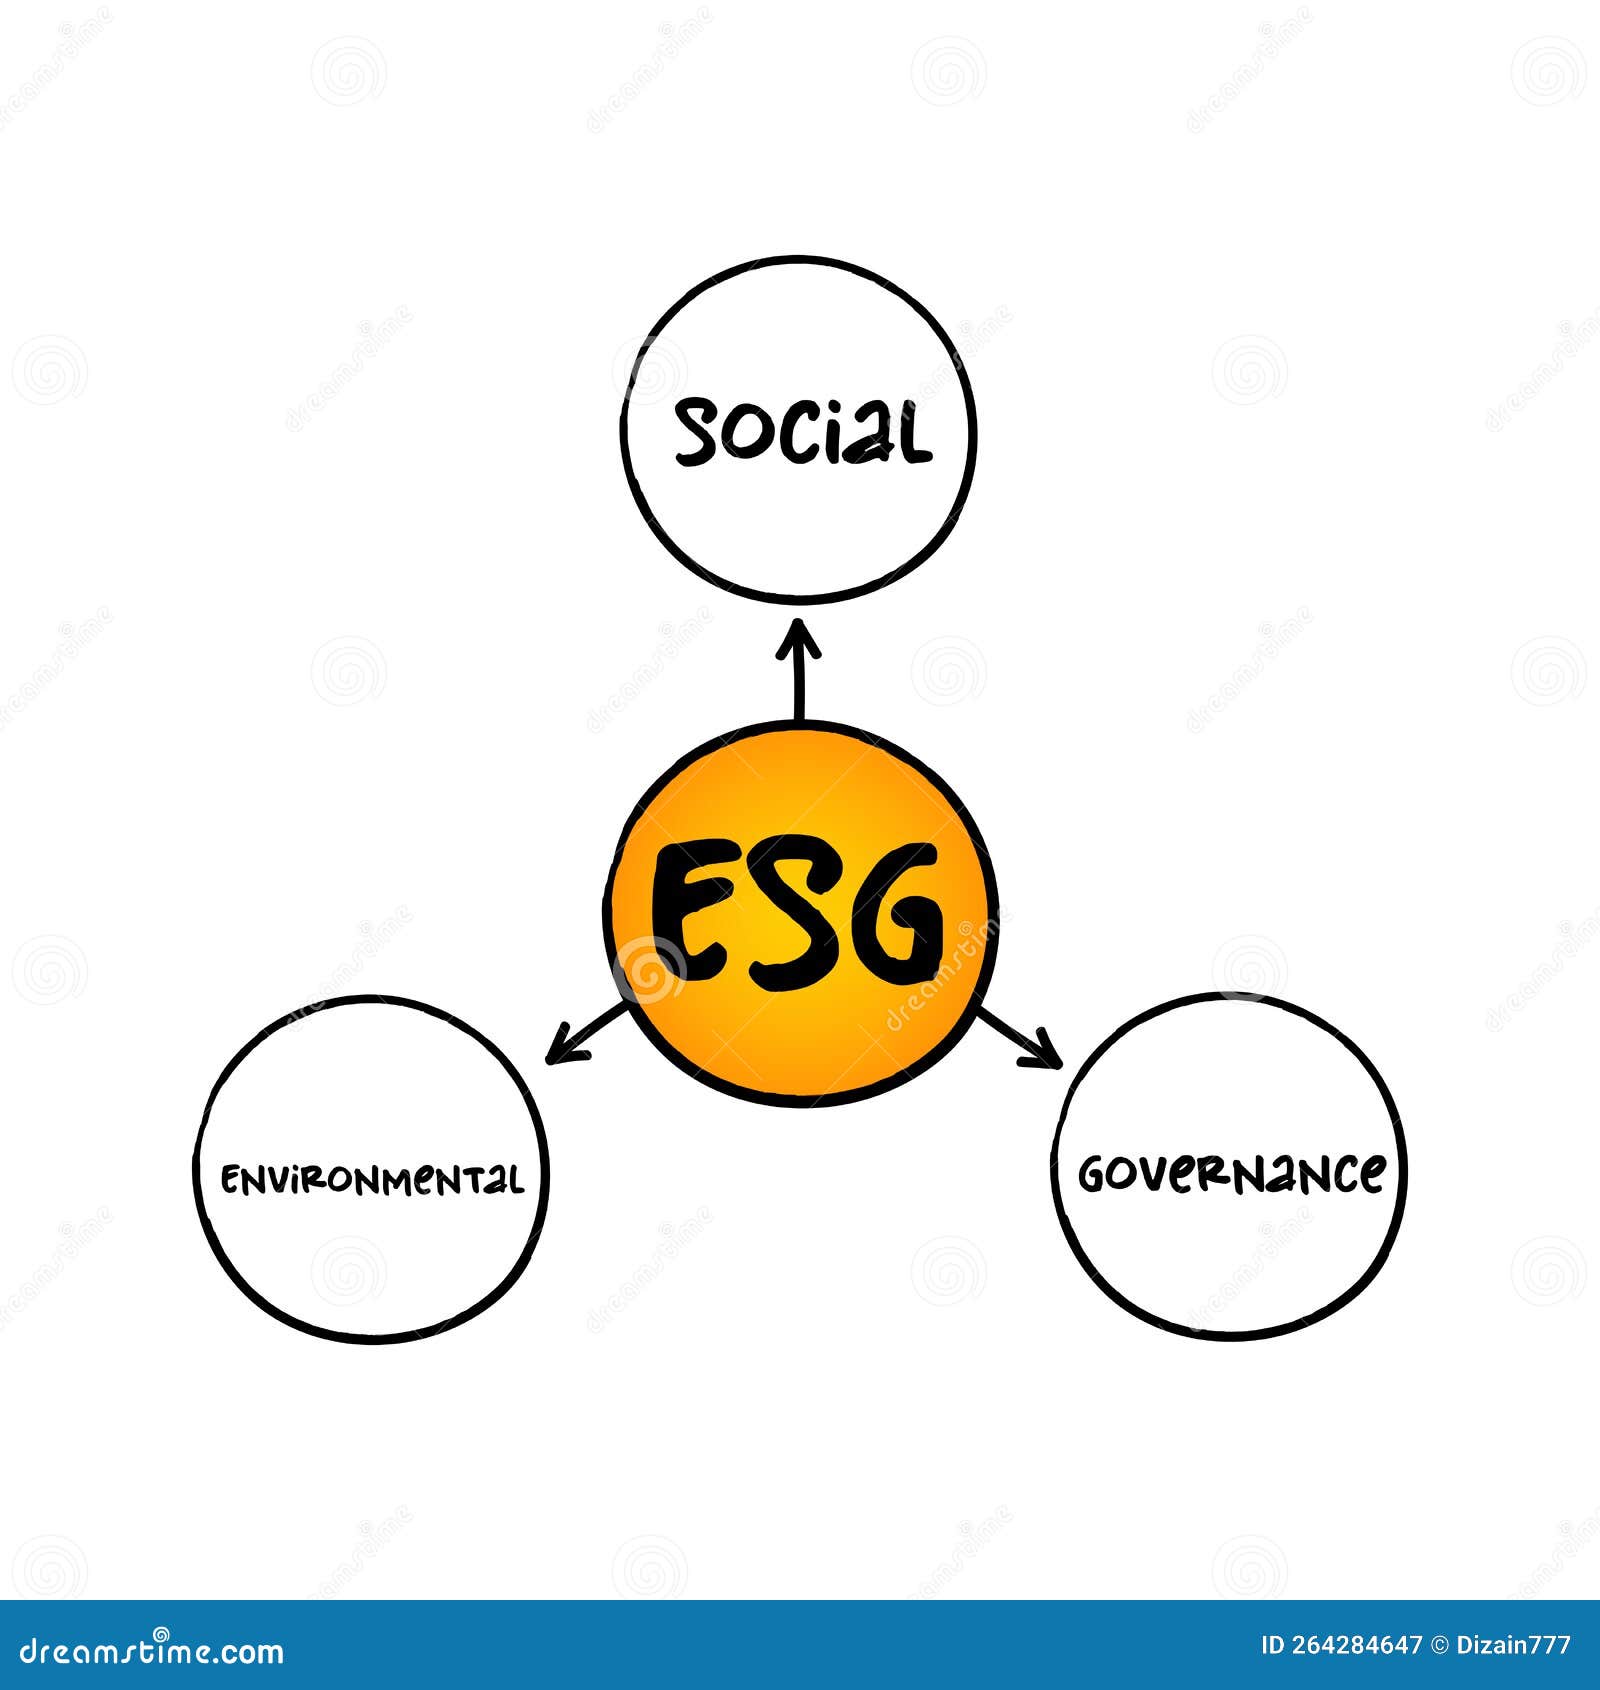 esg - environmental social governance acronym - evaluation of a firmÃ¢â¬â¢s collective consciousness for social and environmental